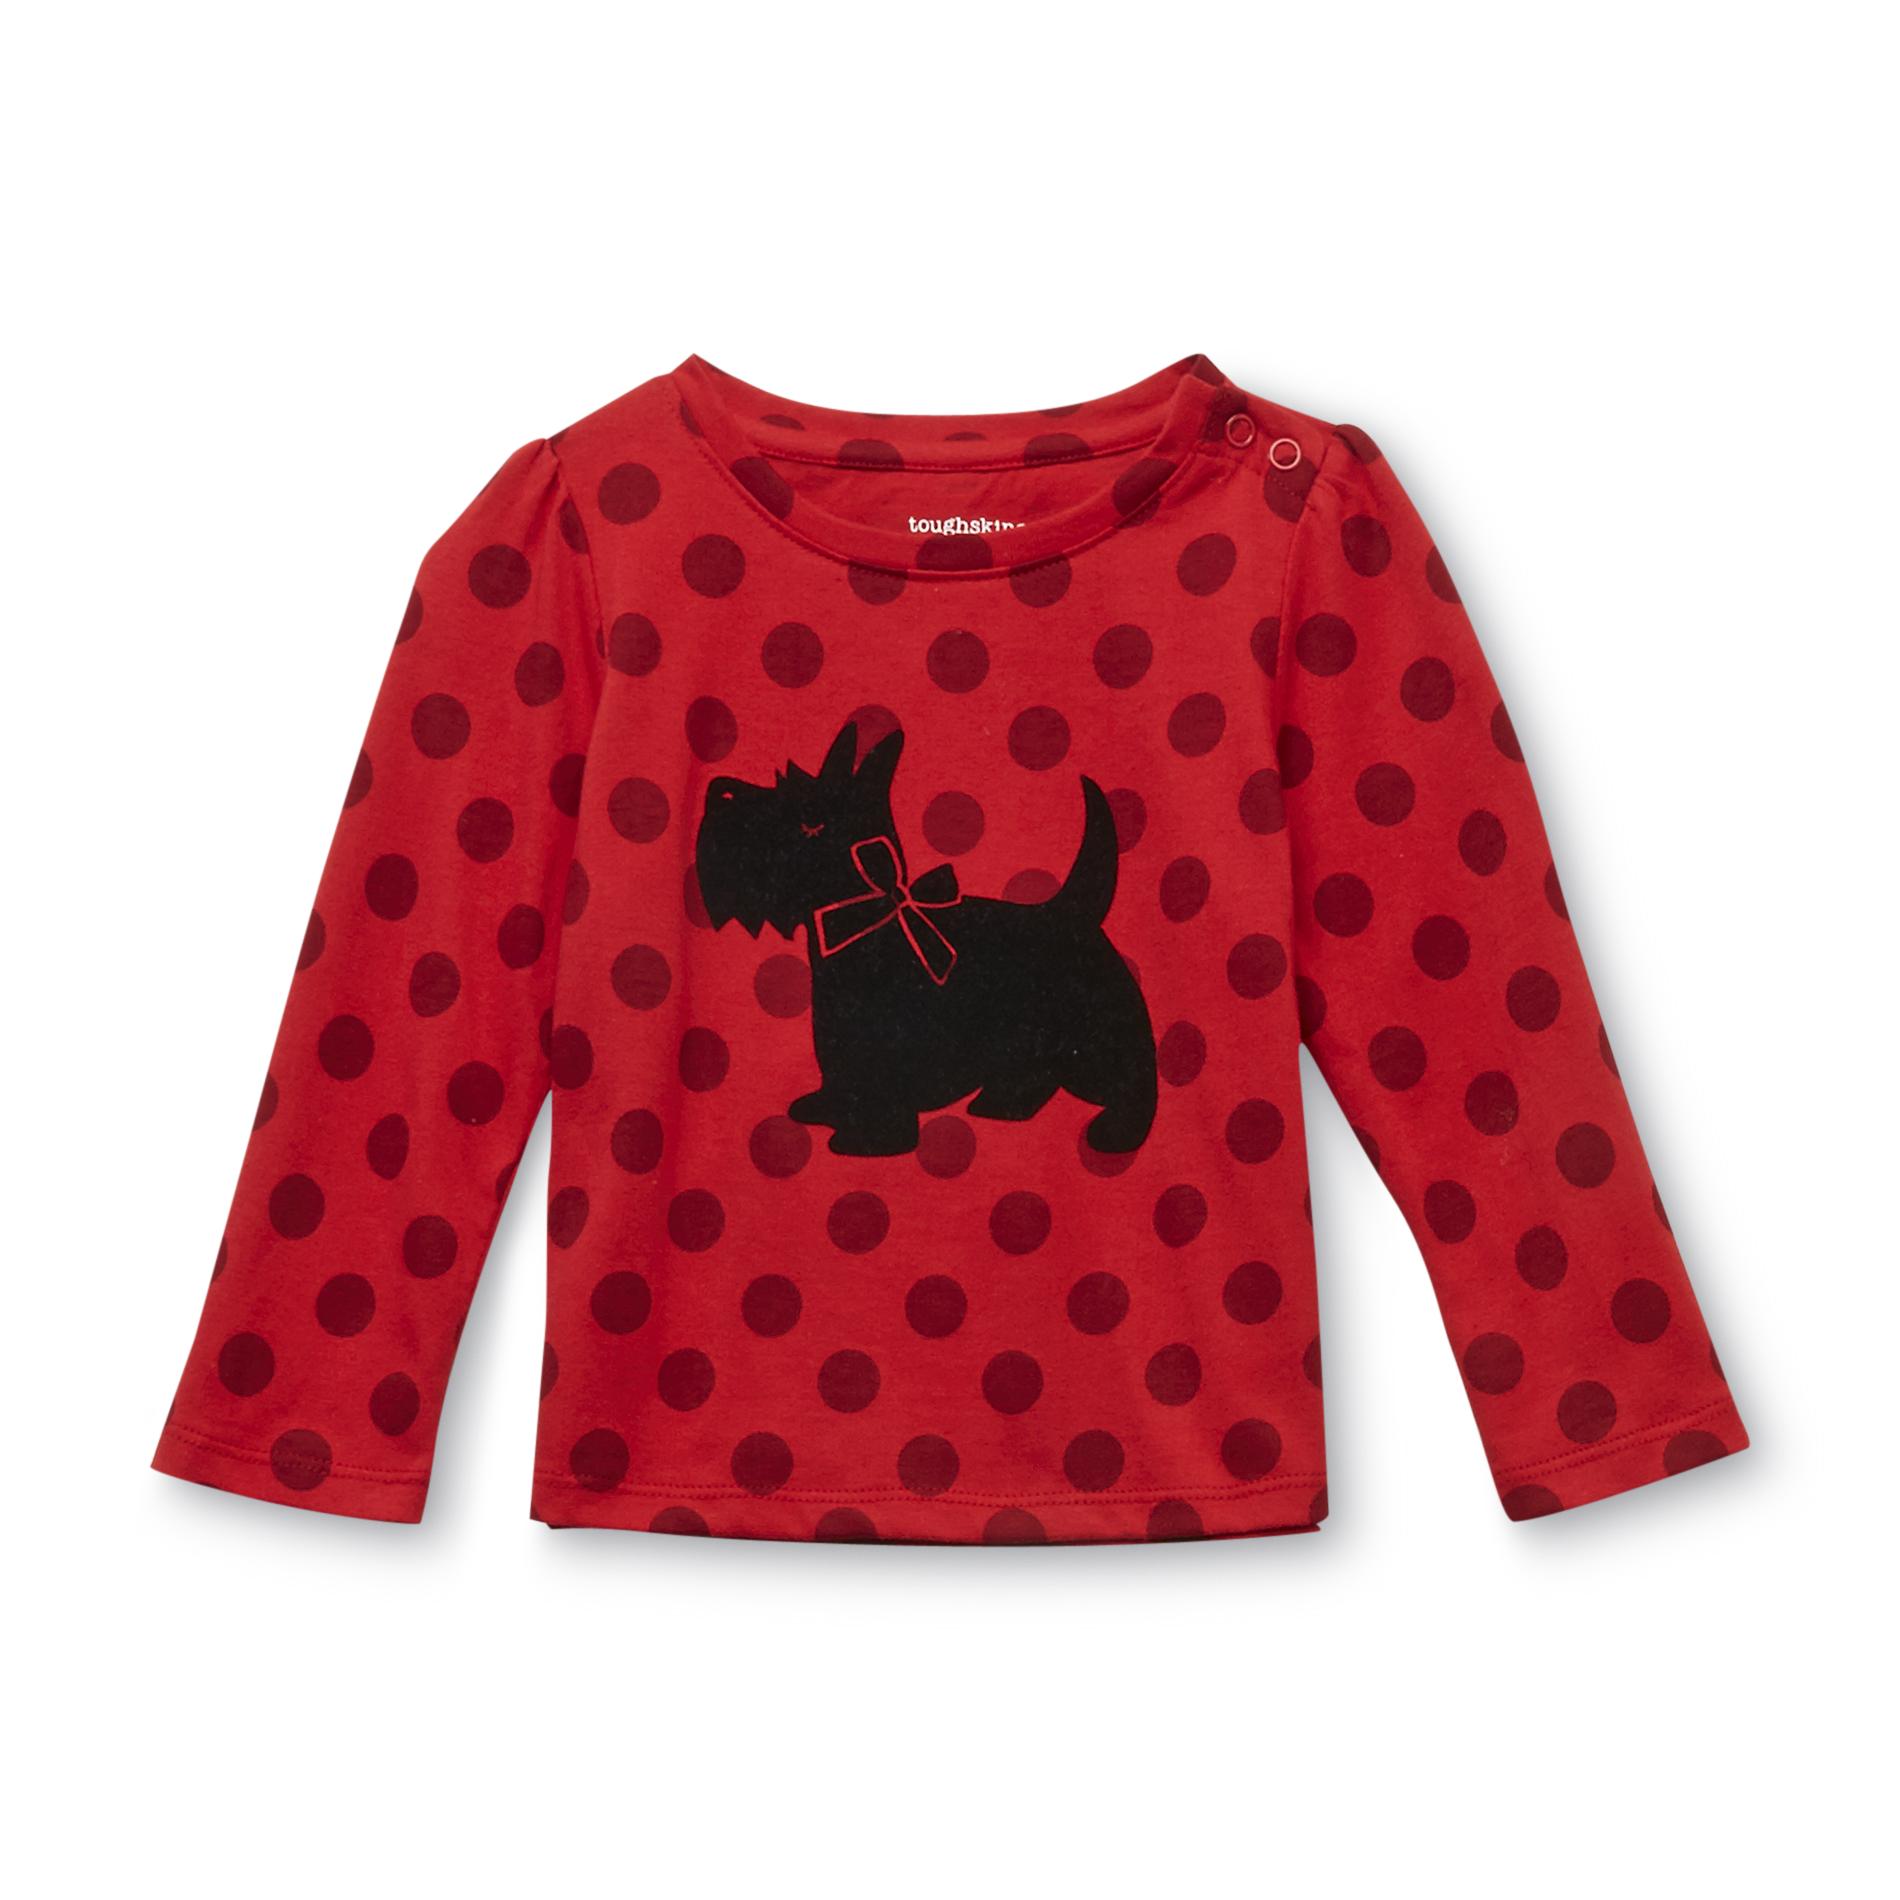 Toughskins Infant & Toddler Girl's Long-Sleeve Graphic T-Shirt - Scottie Dog